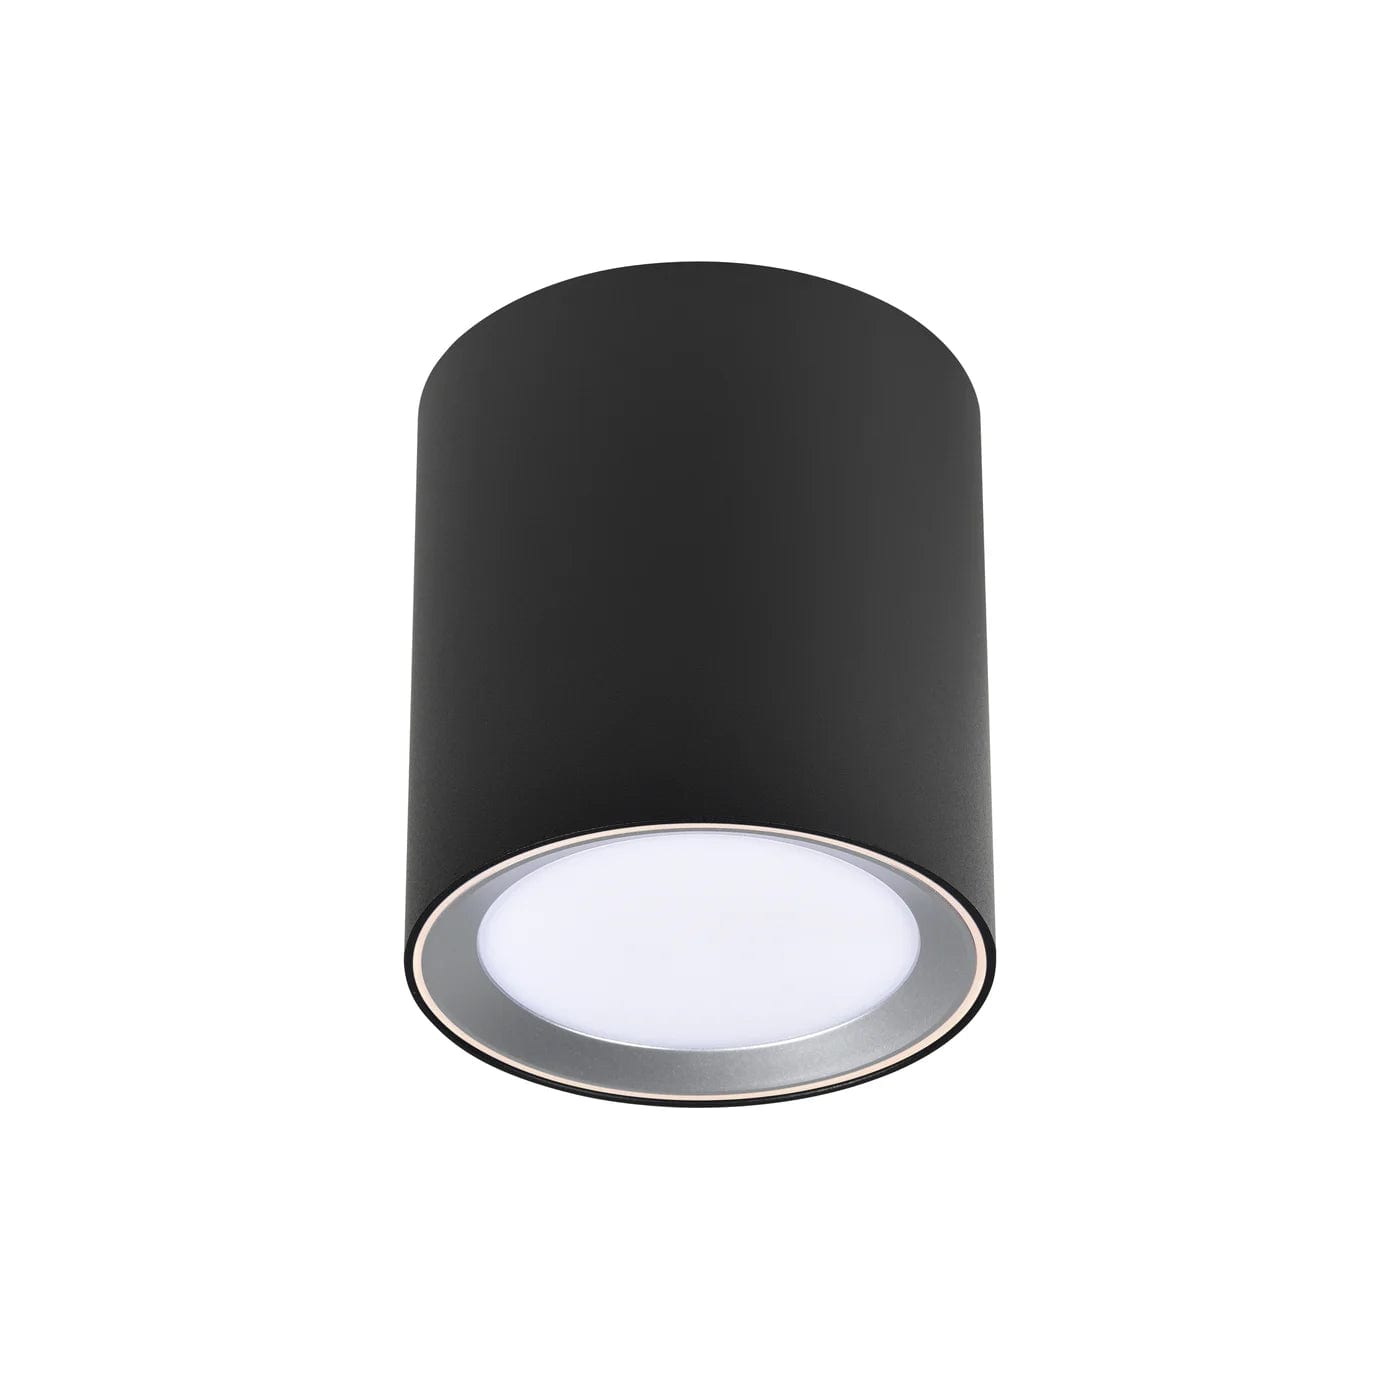 Lampa sufitowa LANDON LONG czarny Nordlux    Eye on Design